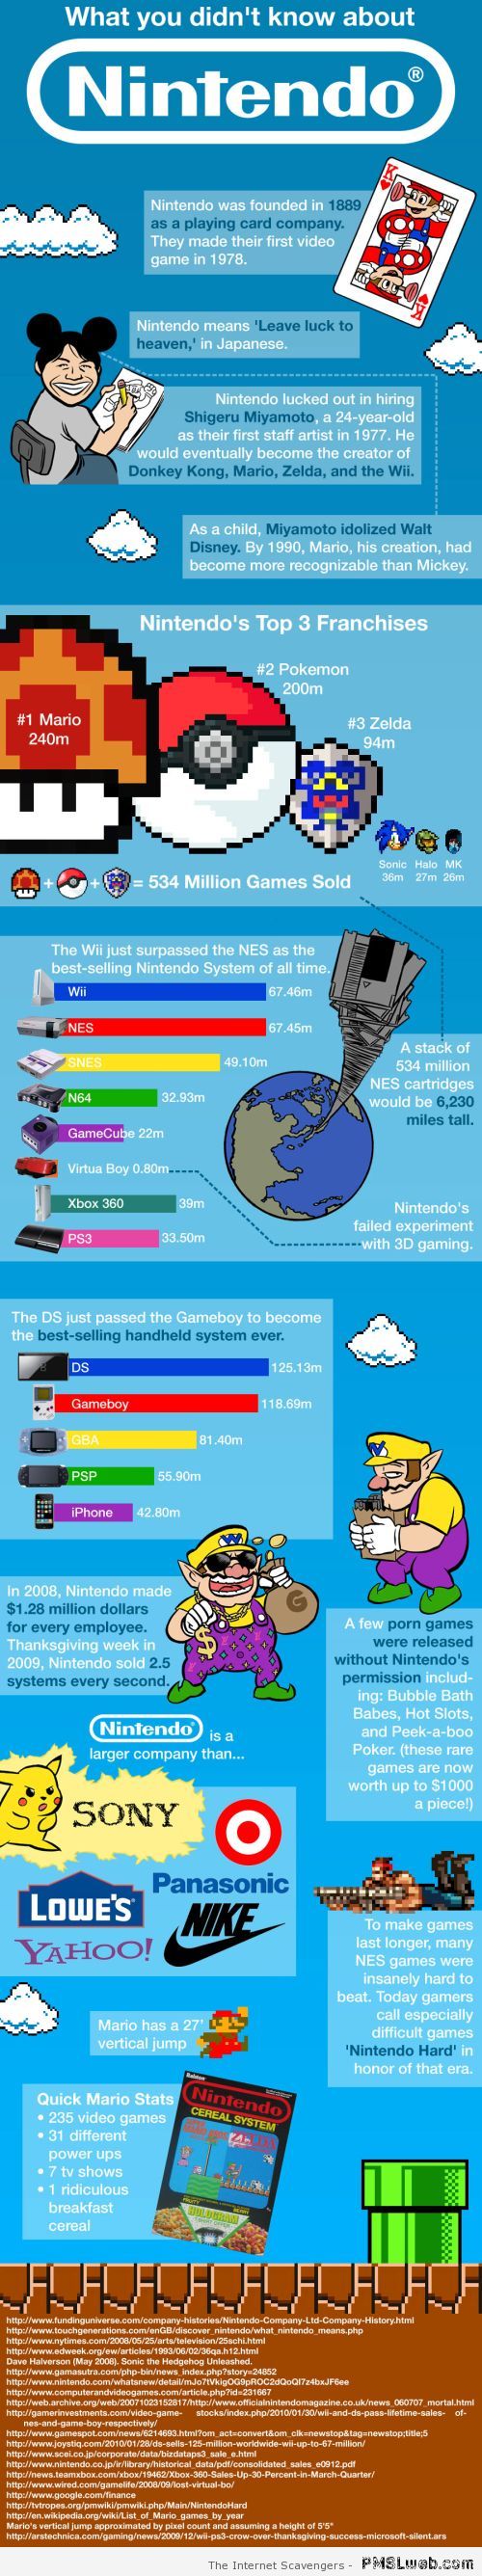 Interesting Nintendo facts at PMSLweb.com